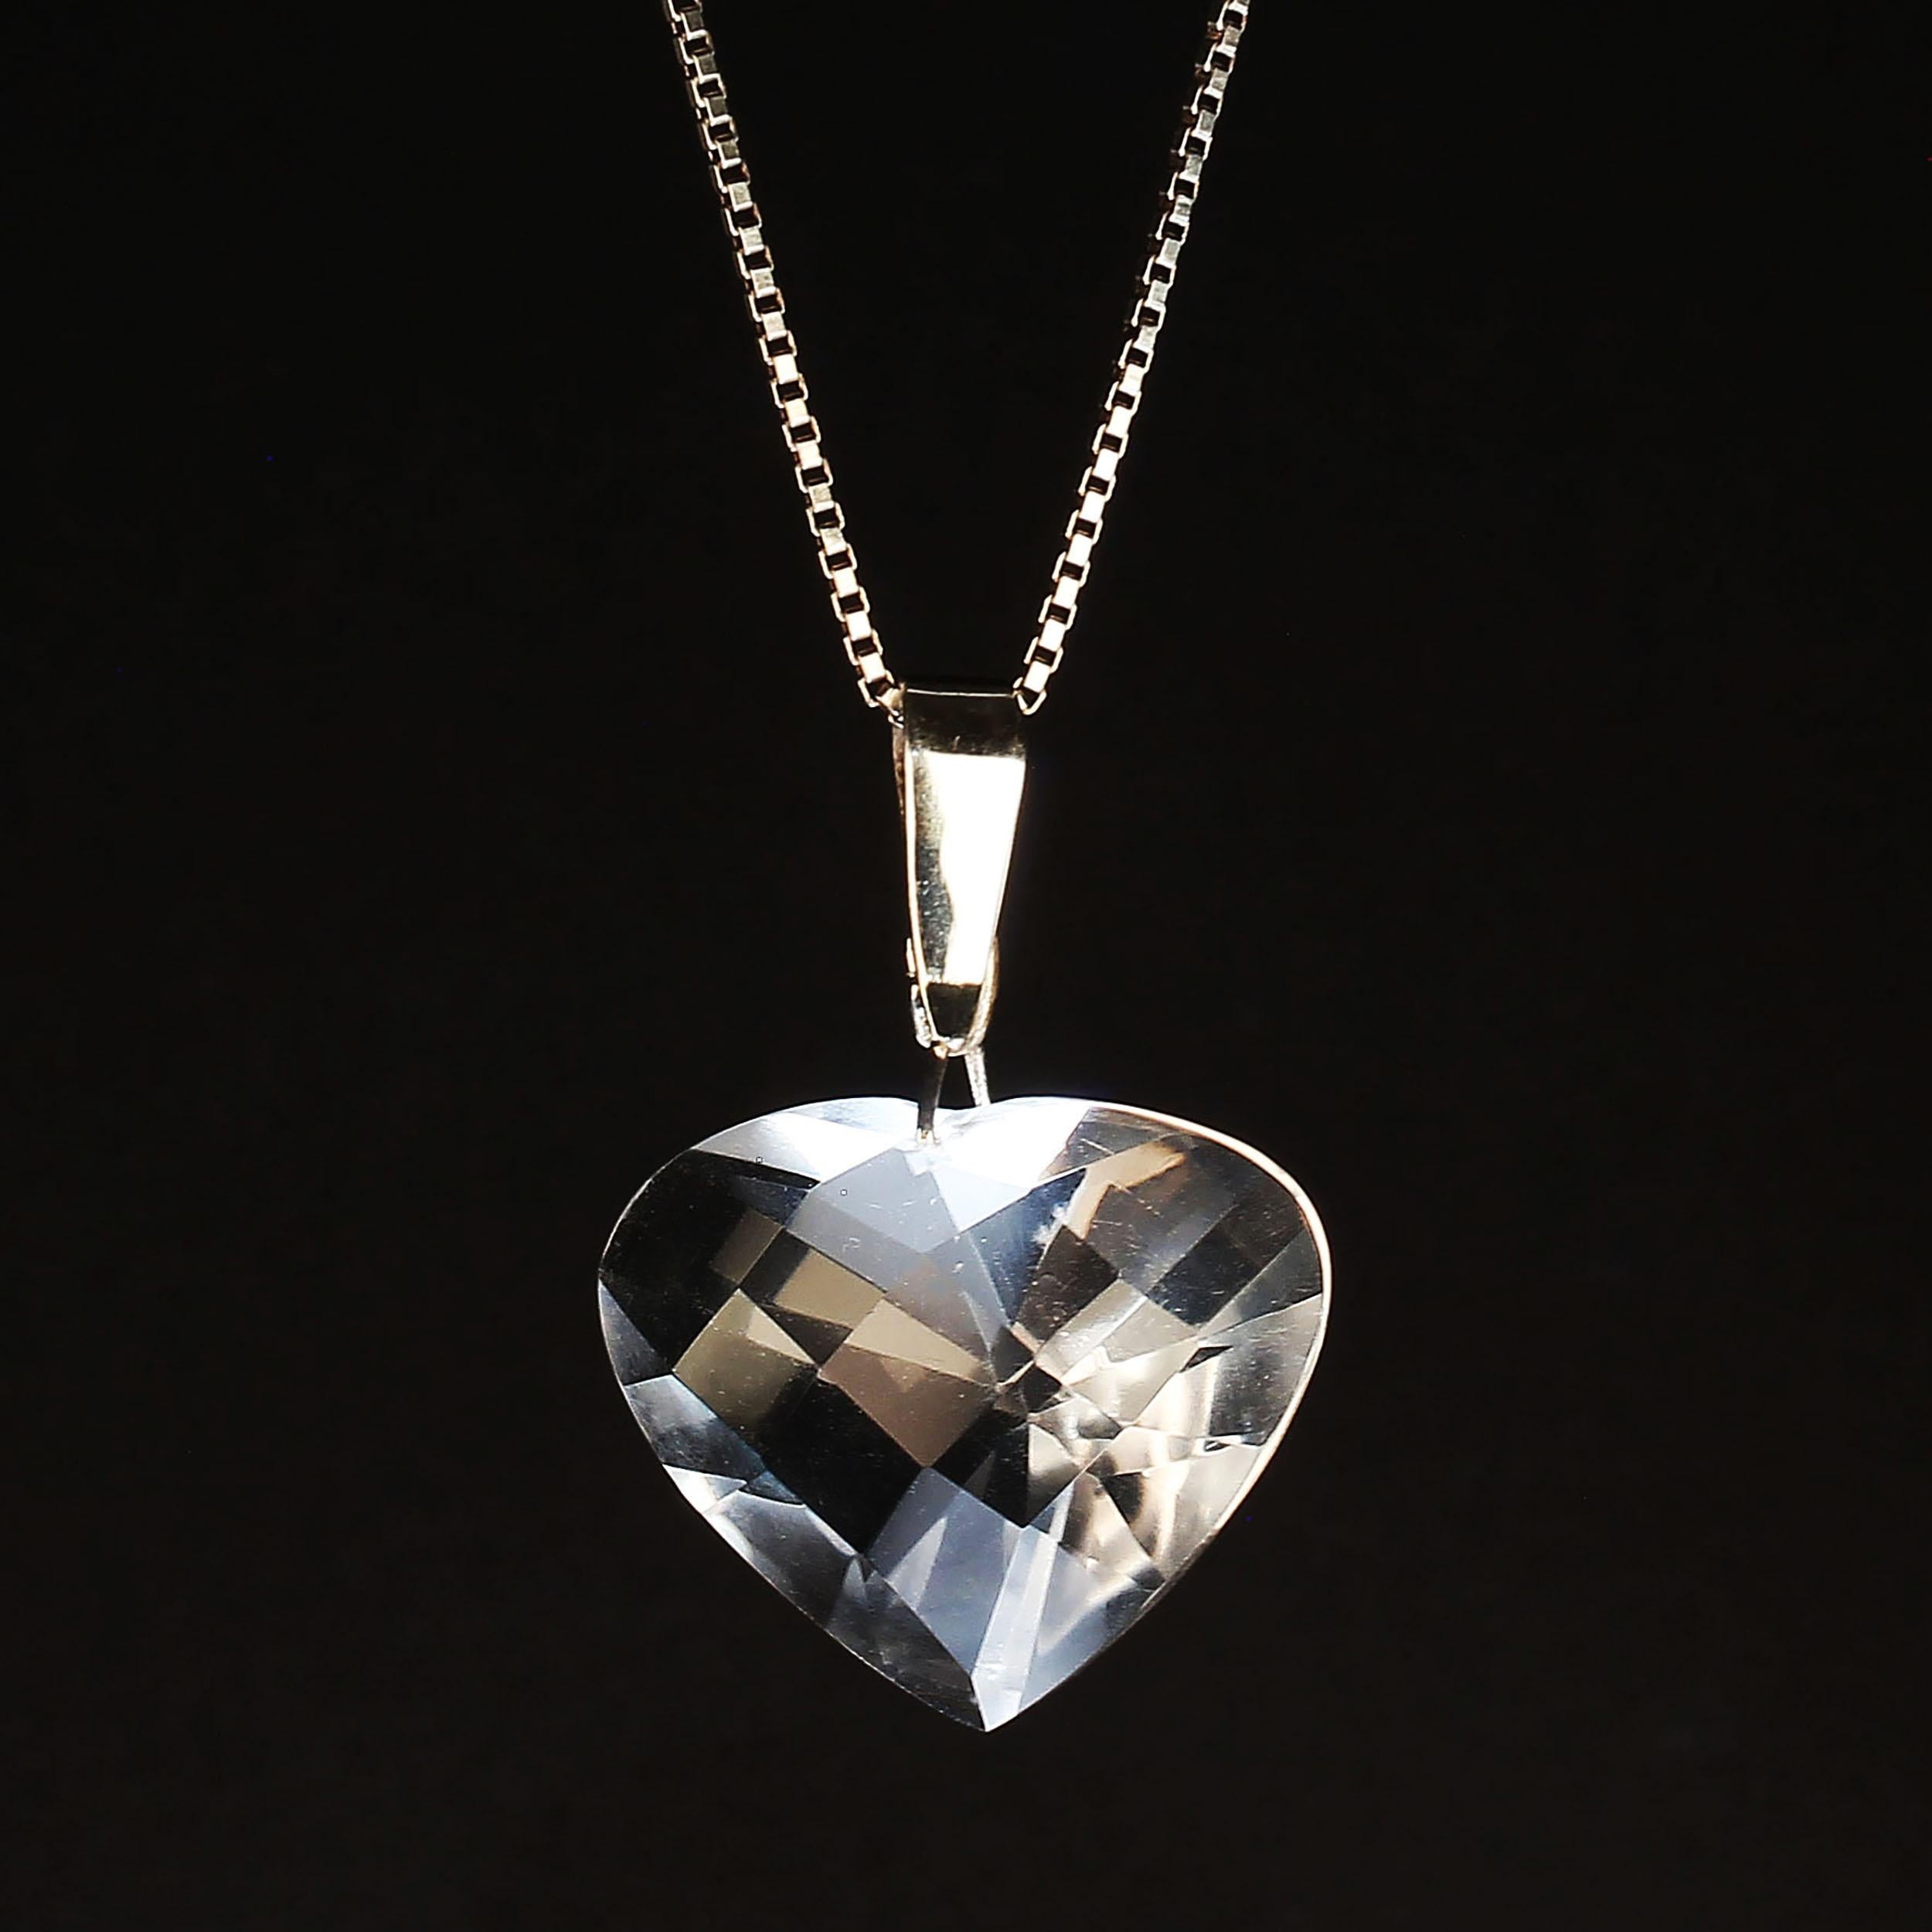 Mixed Cut AJD 66 Carat Faceted Brazilian Quartz Crystal Heart   Great Gift!